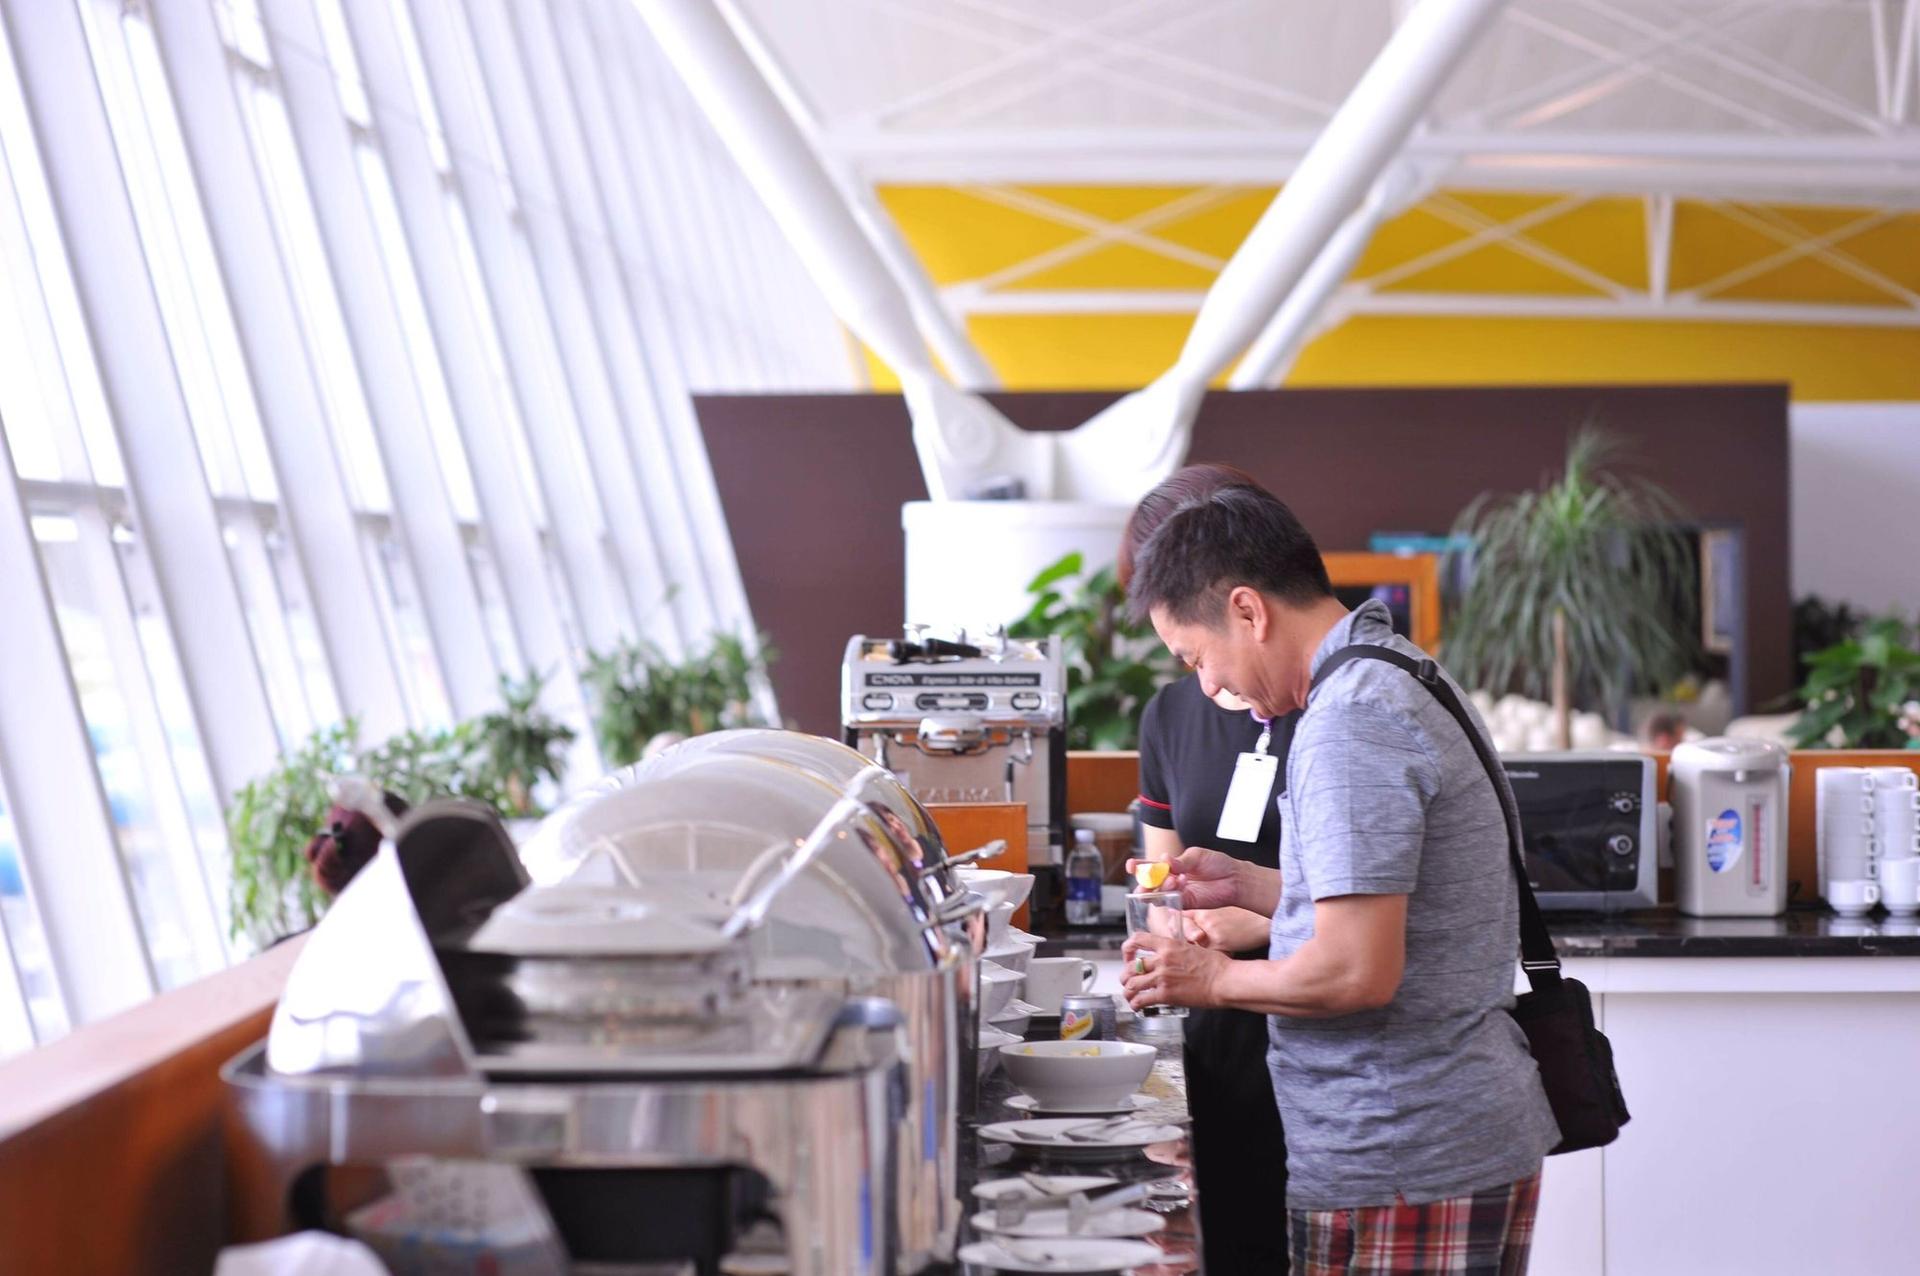 Noi Bai International Airport Business Lounge image 16 of 26